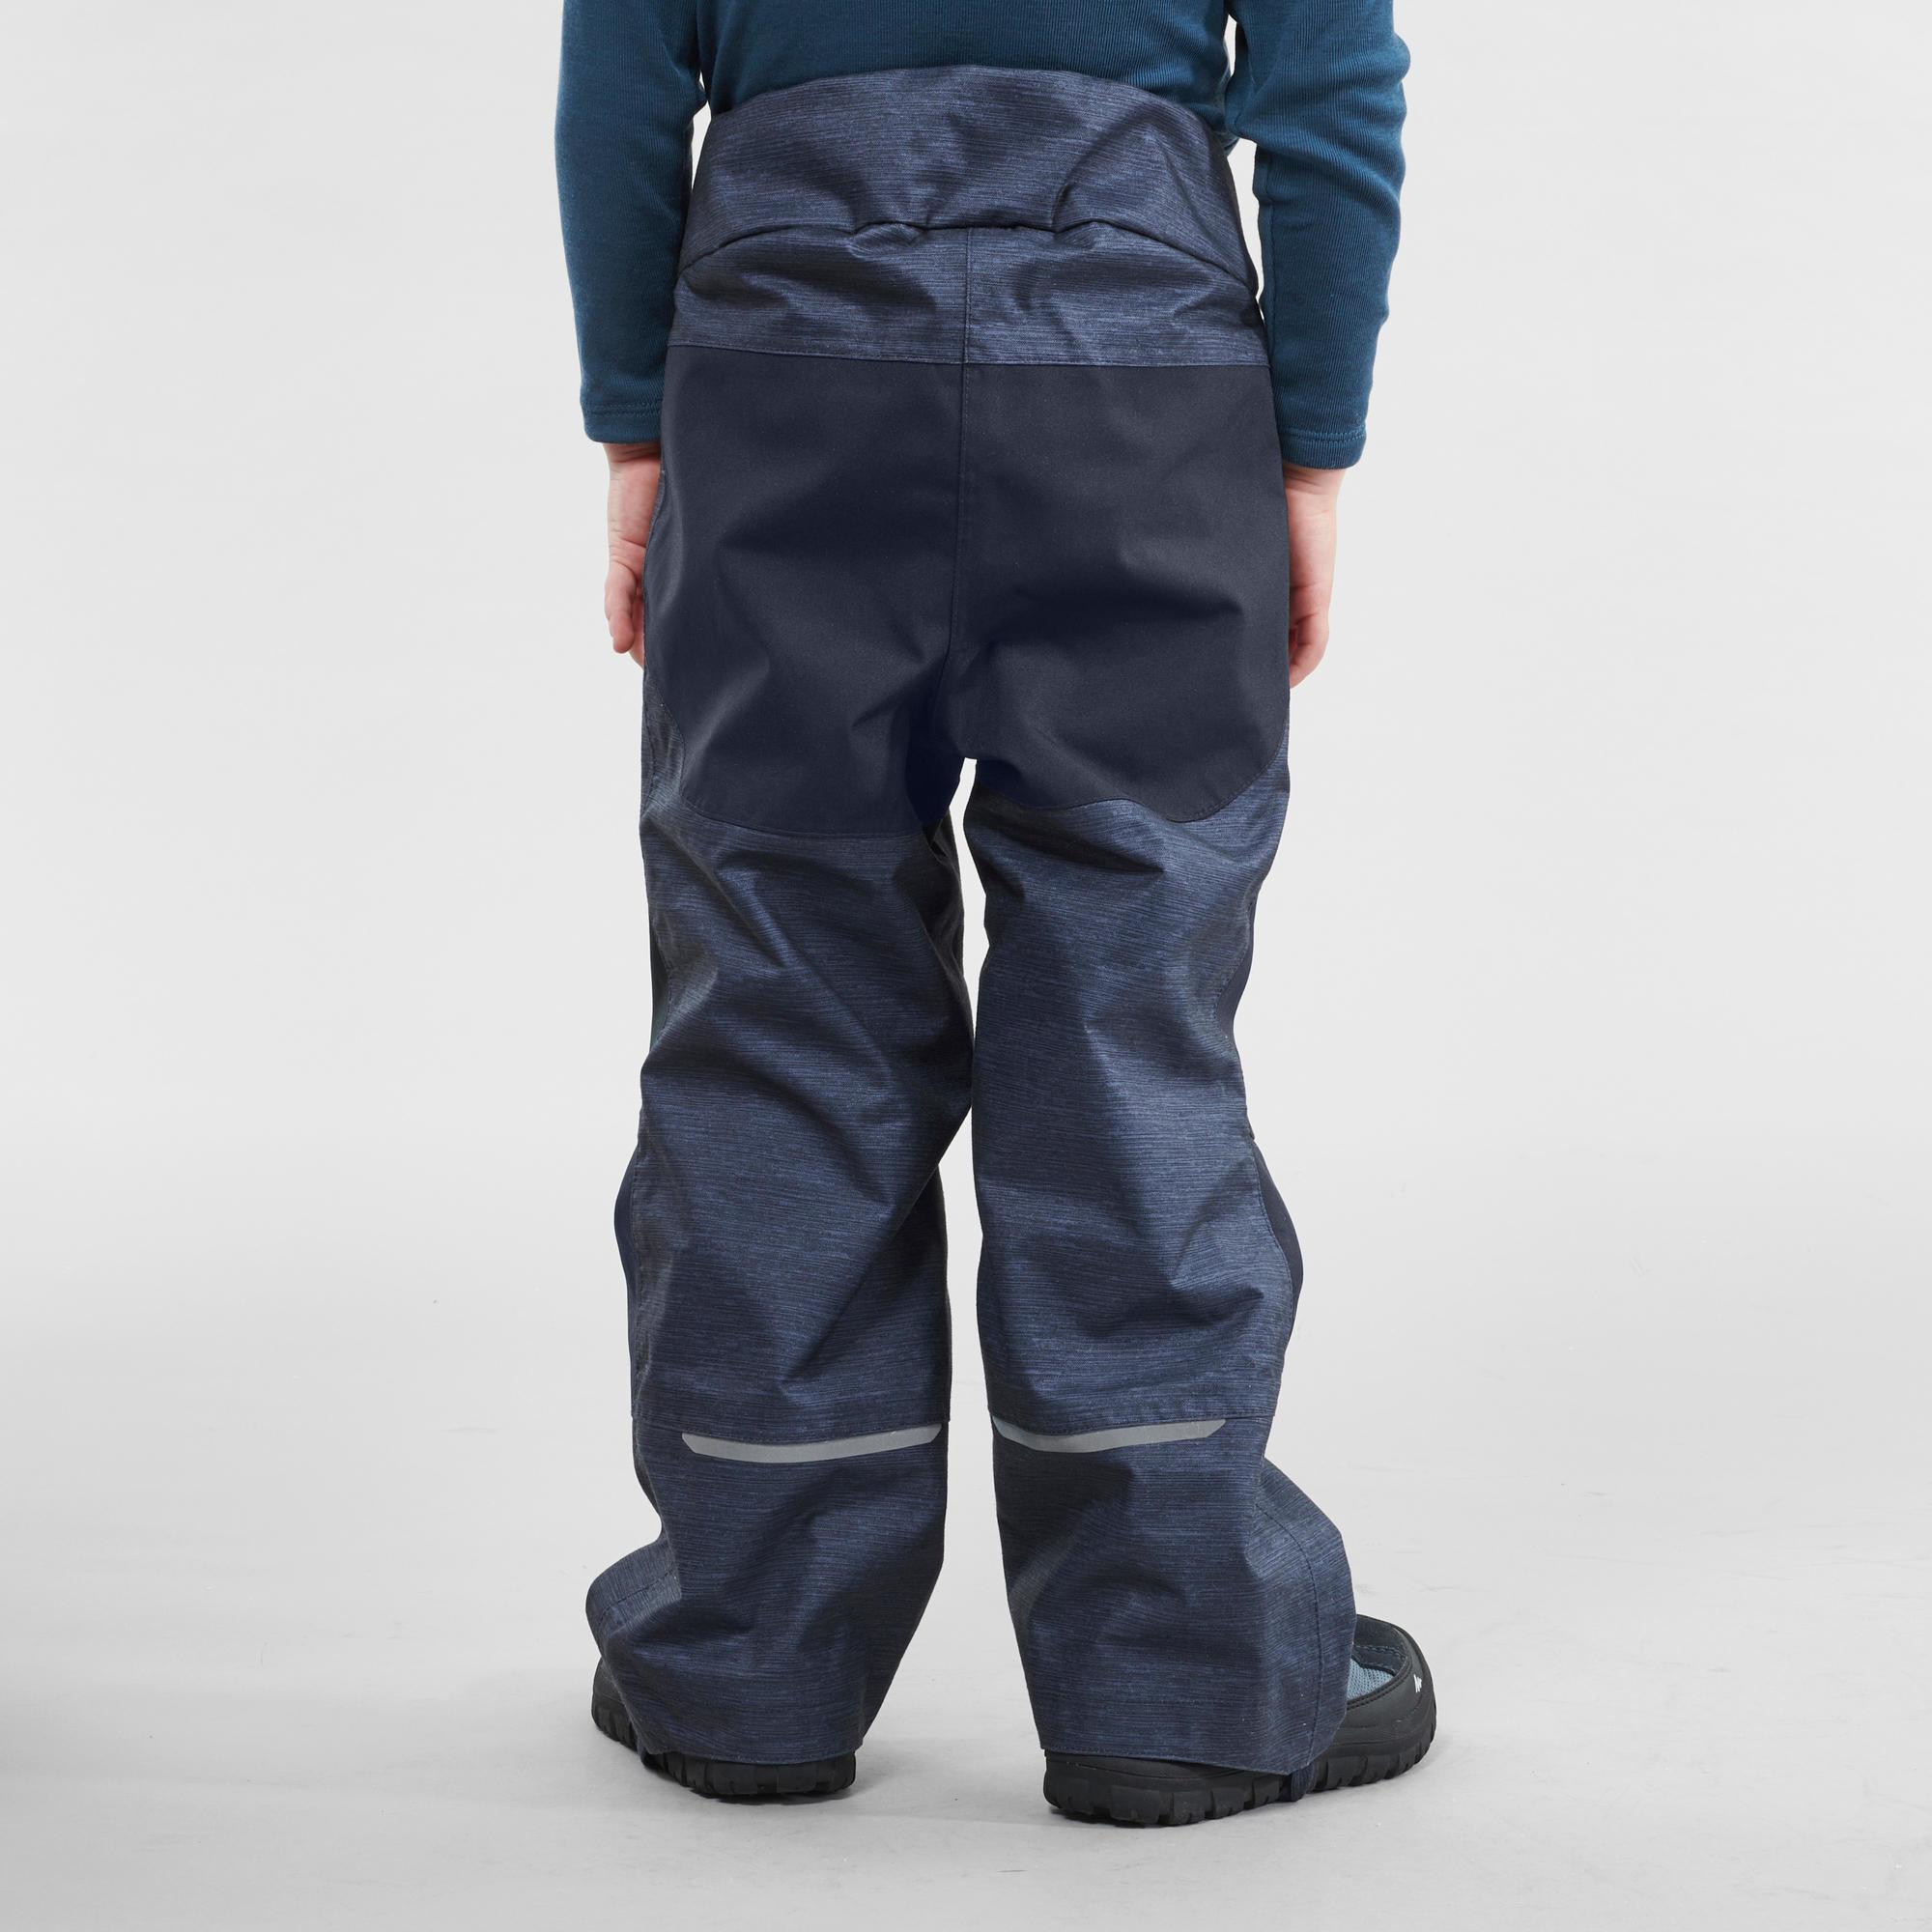 Blu navy 14A Quechua Pantaloni di stoffa MODA BAMBINI Pantaloni Impermeabile sconto 78% 